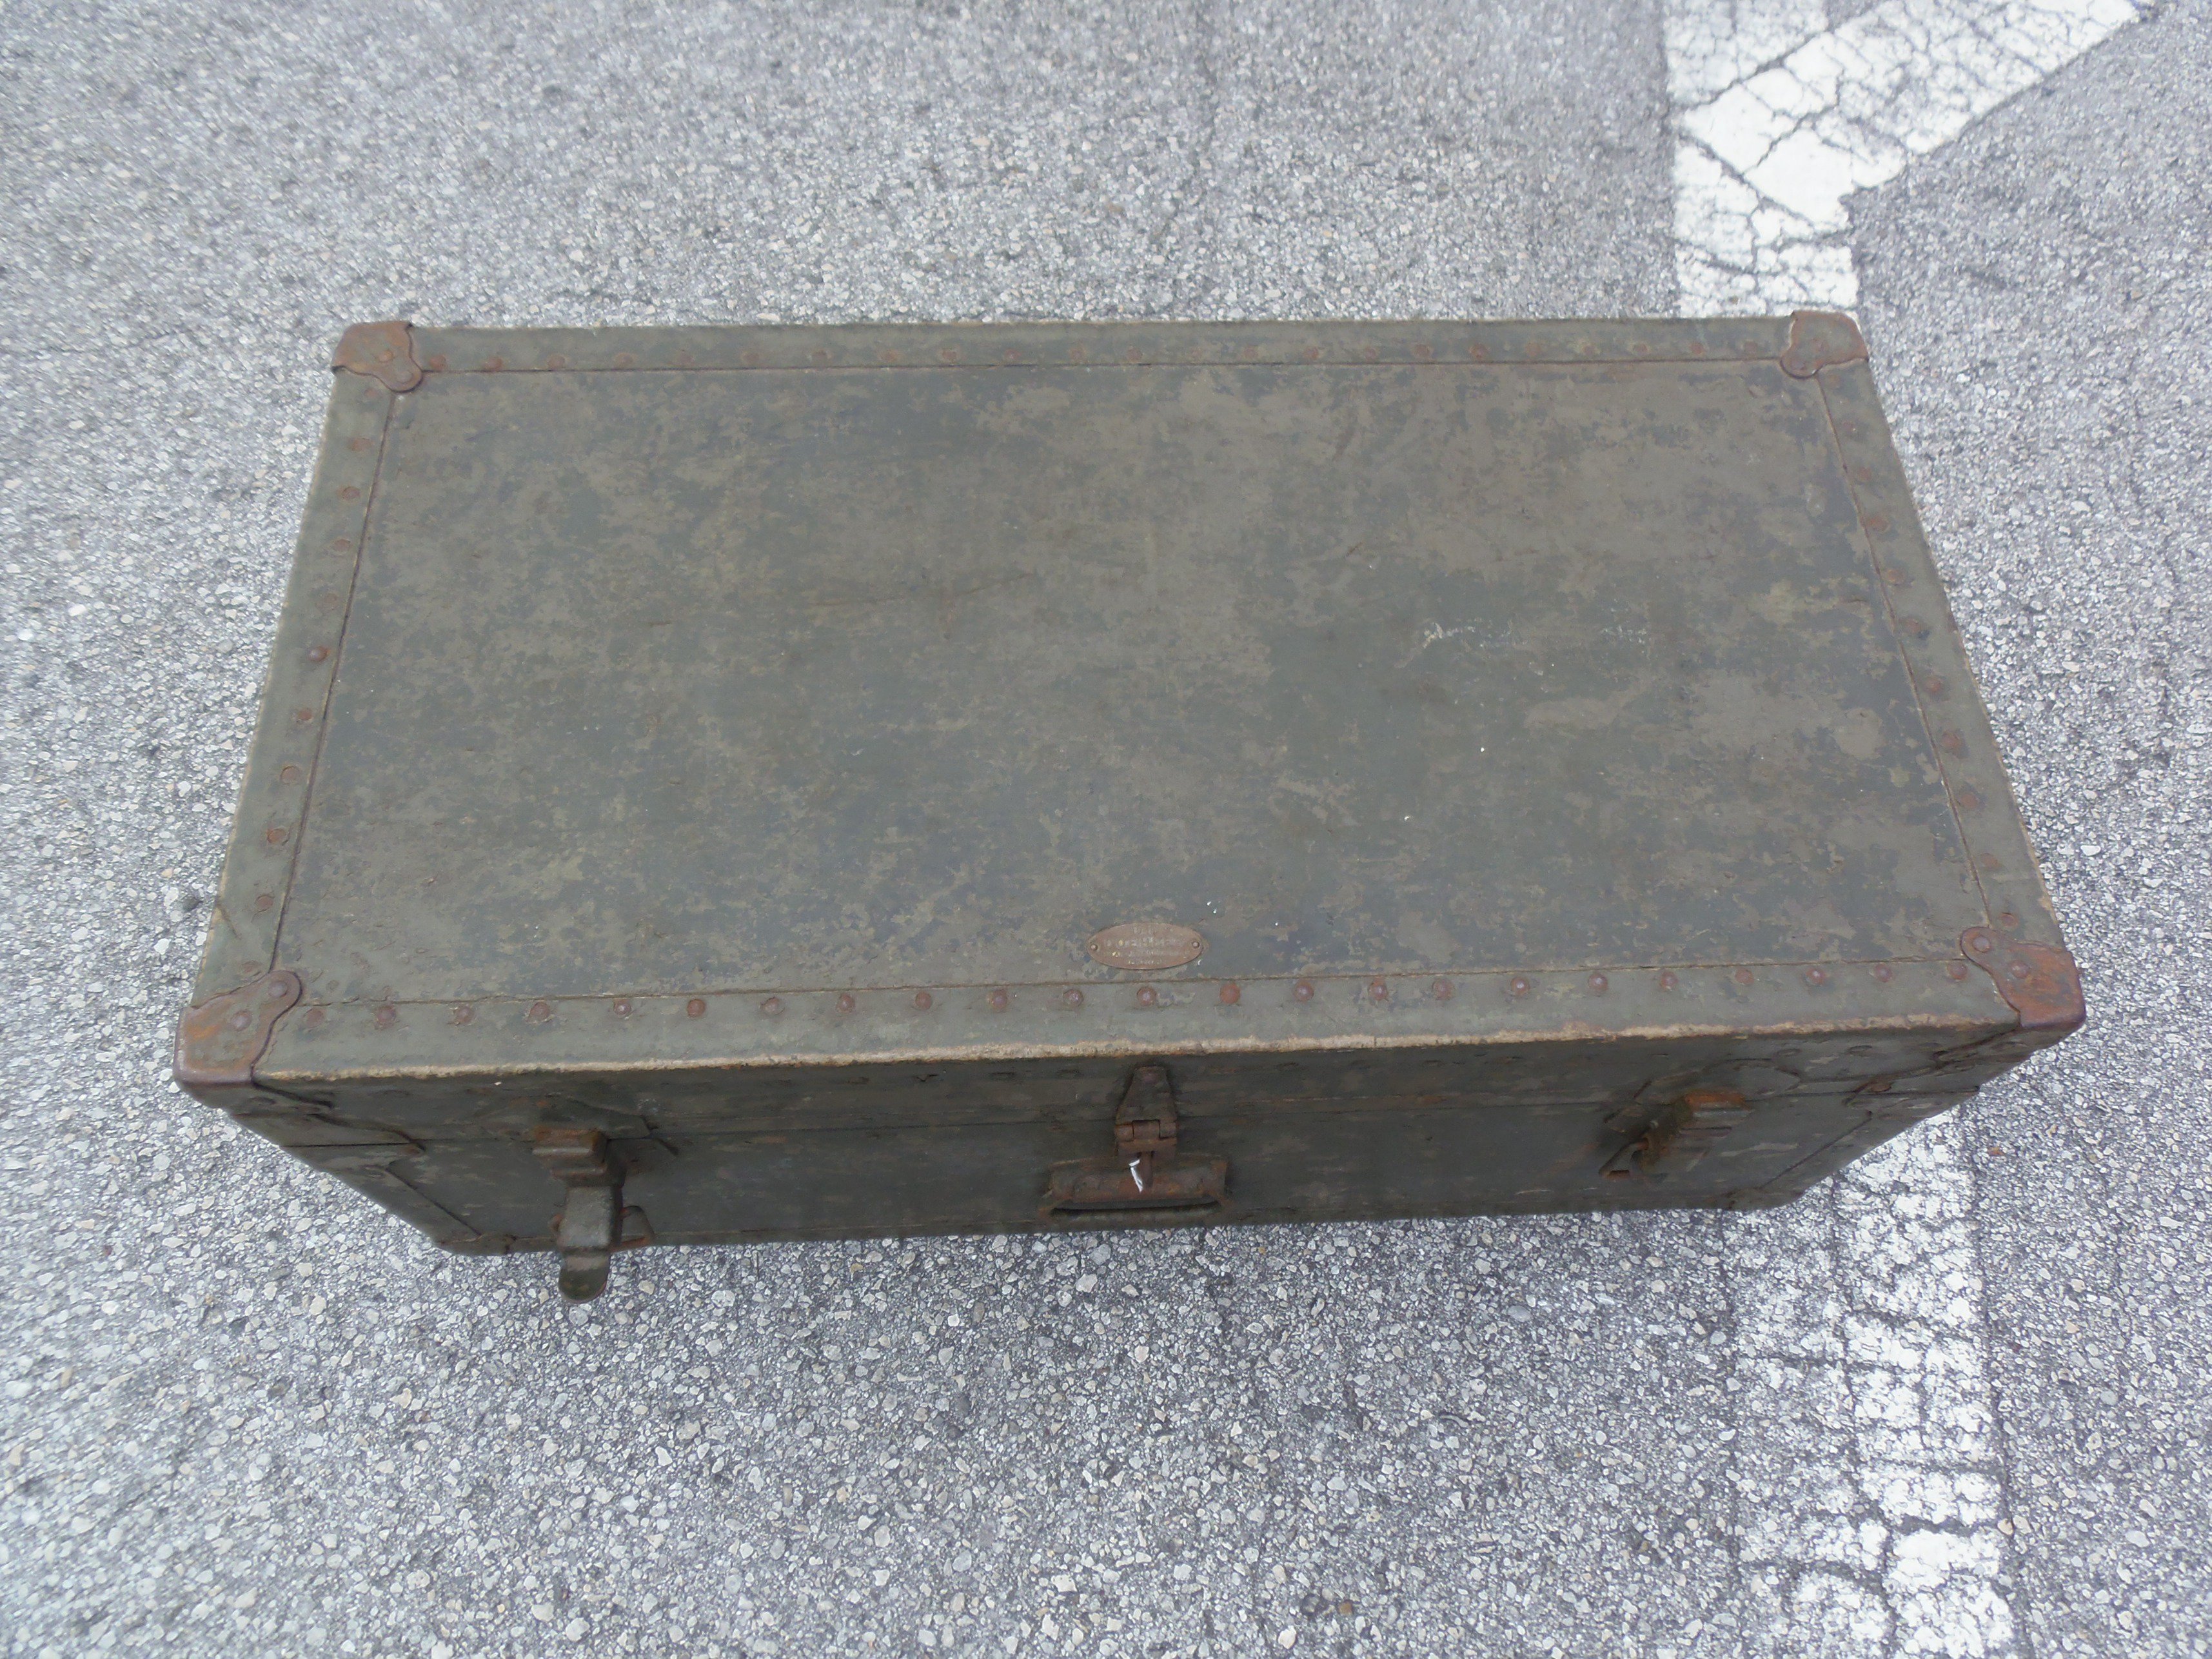 Kenneth Adkins on X: 1949 Vintage Military Army Metal/Wood Foot Locker  w/Storage Trunk & Tray For Sale $150.00 please call 352-364-2193   / X